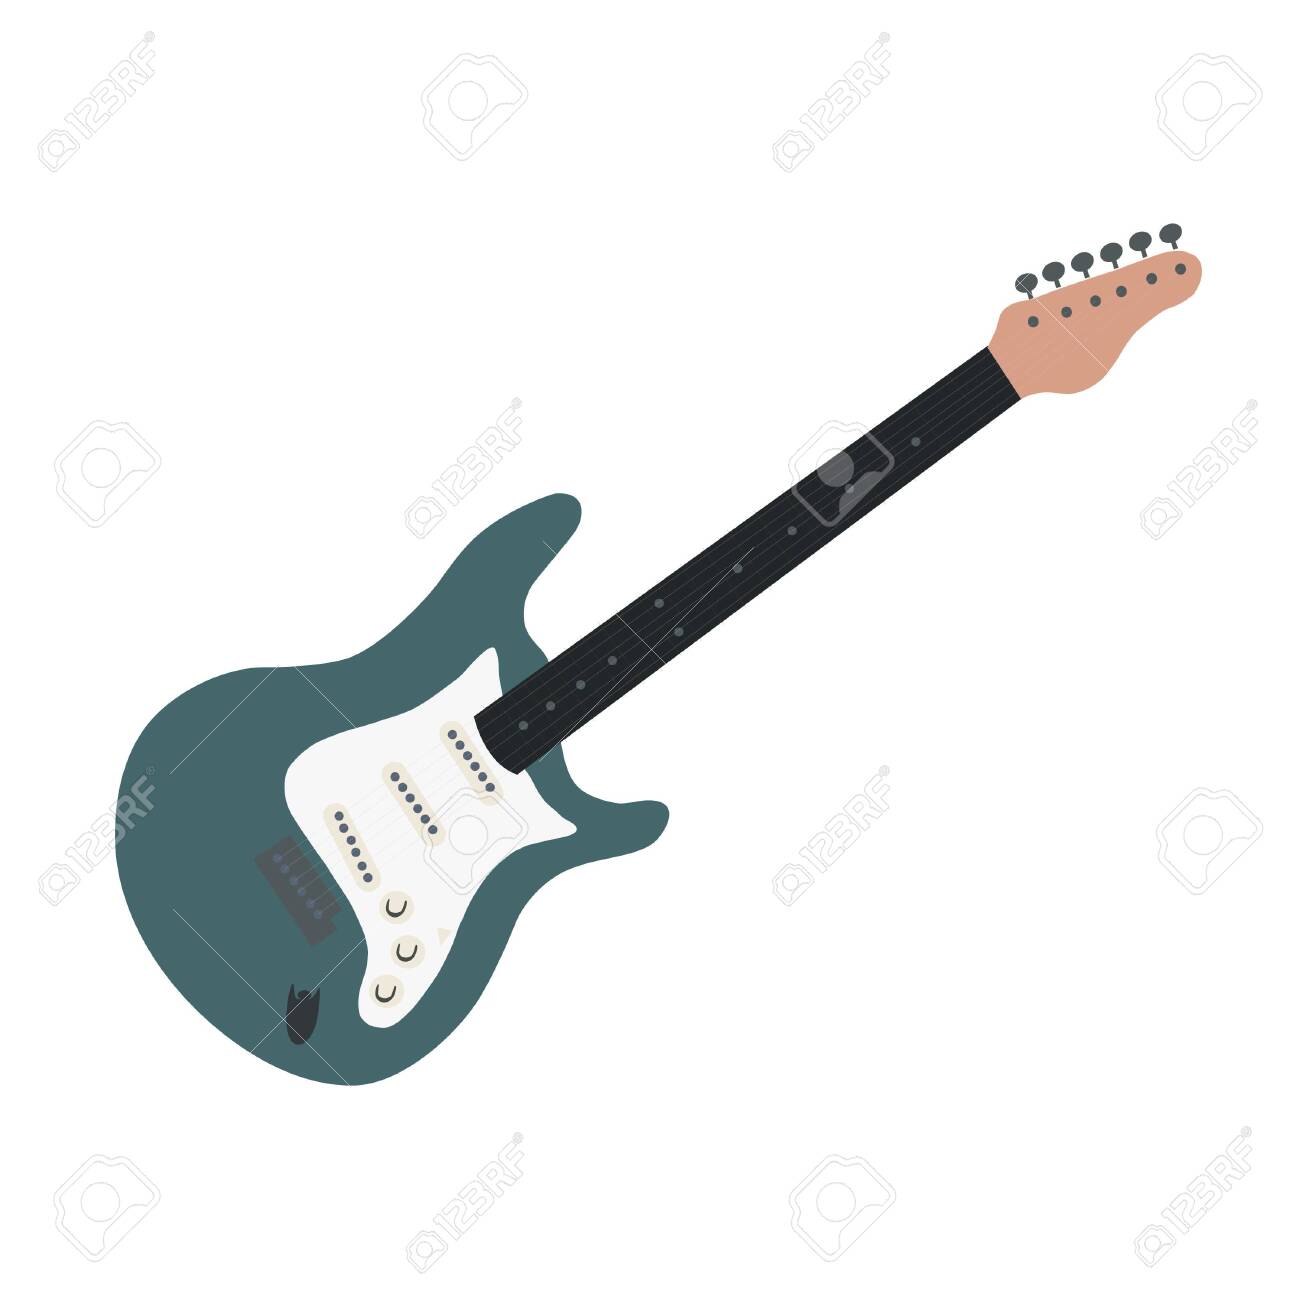 electric guitar vector